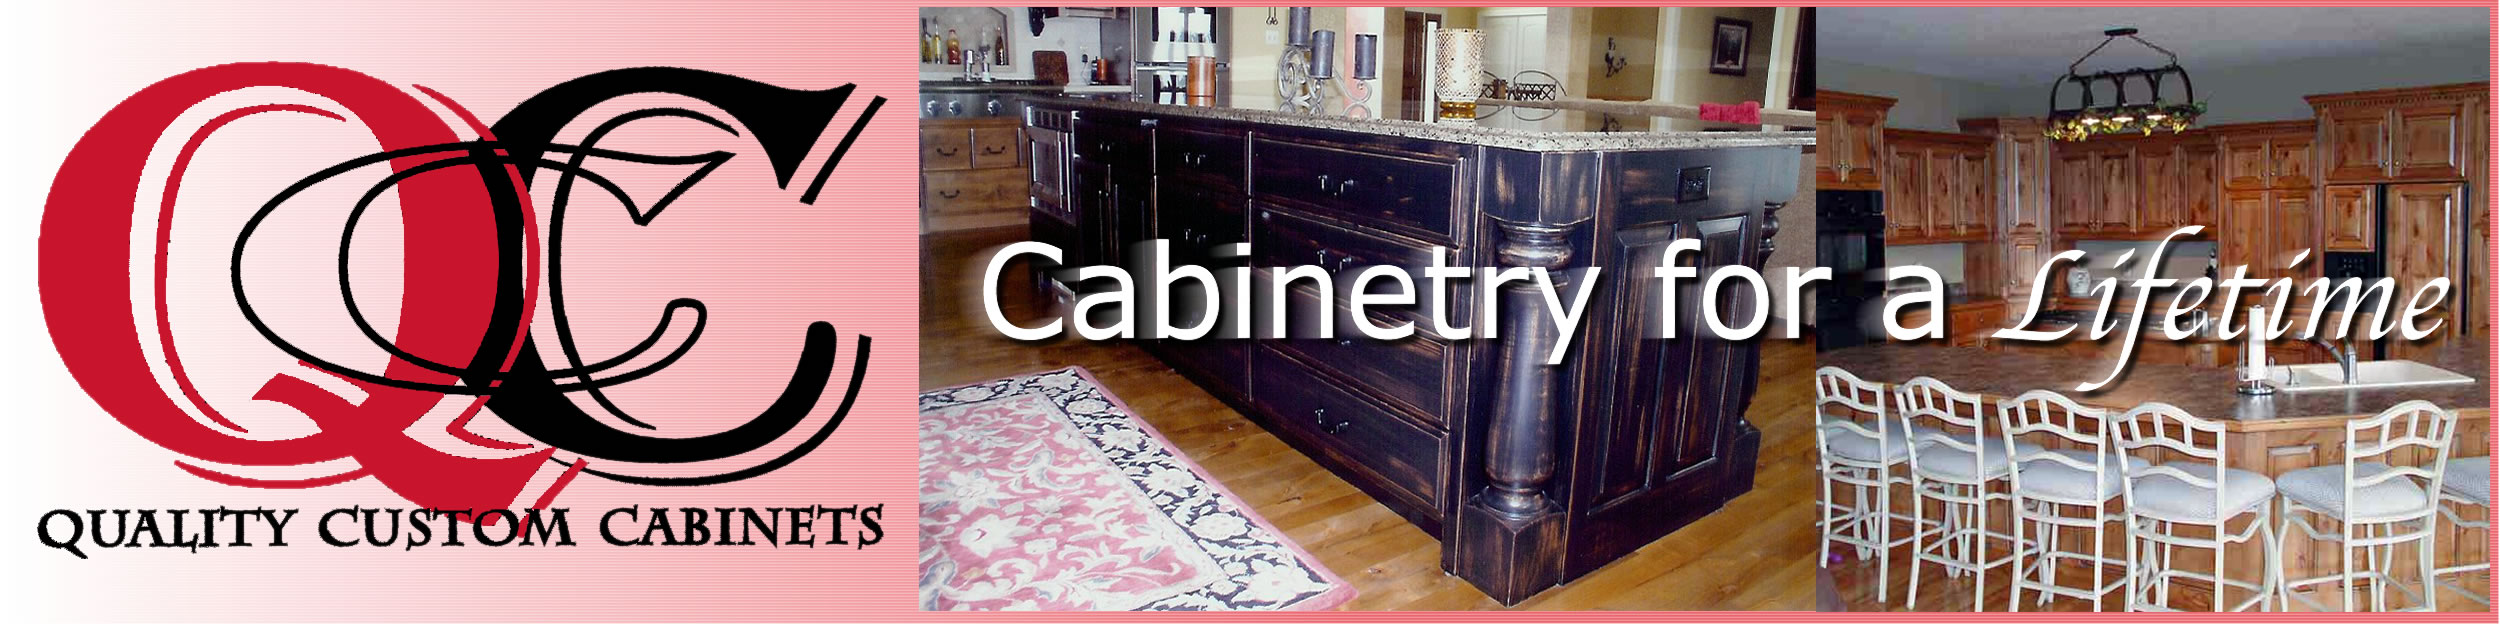 QC Cabinetry: Design & More